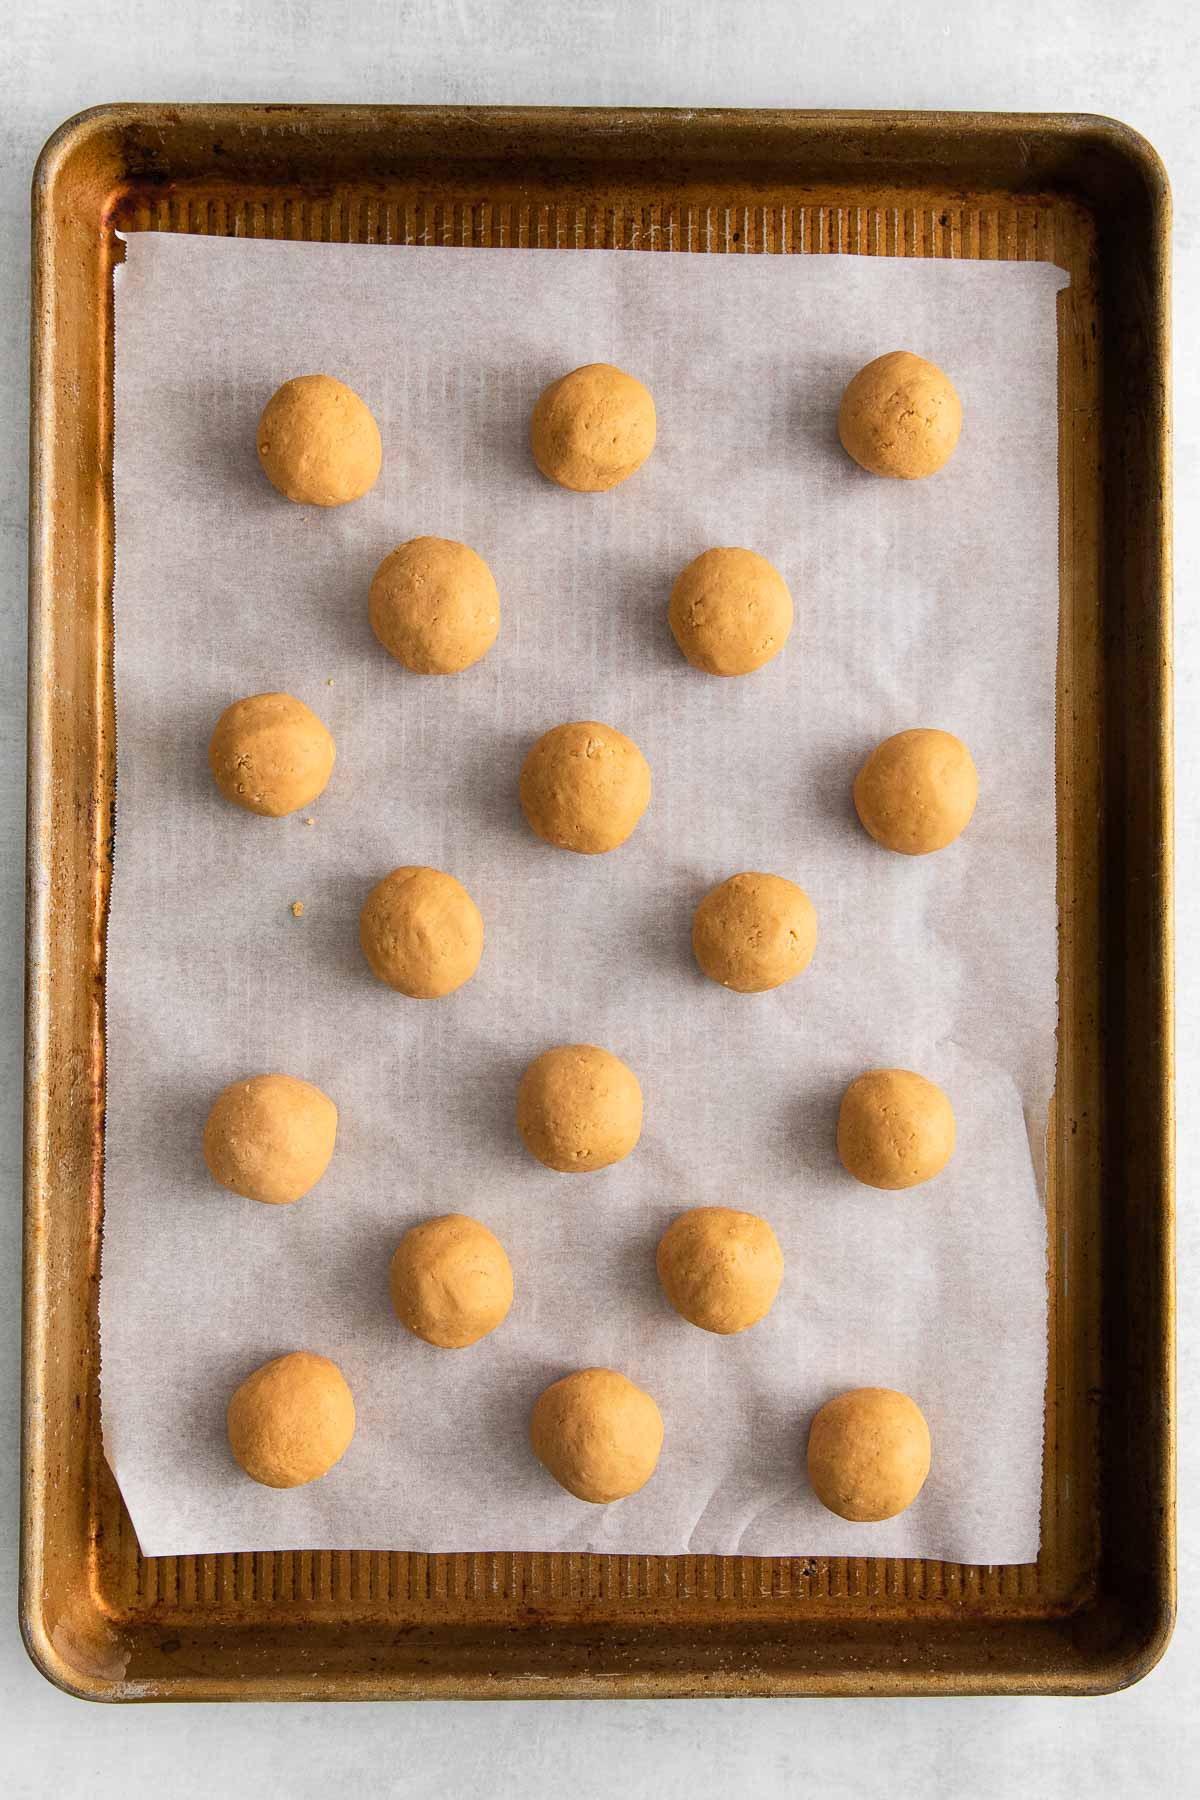 eighteen peanut butter balls on a baking sheet with parchment paper.